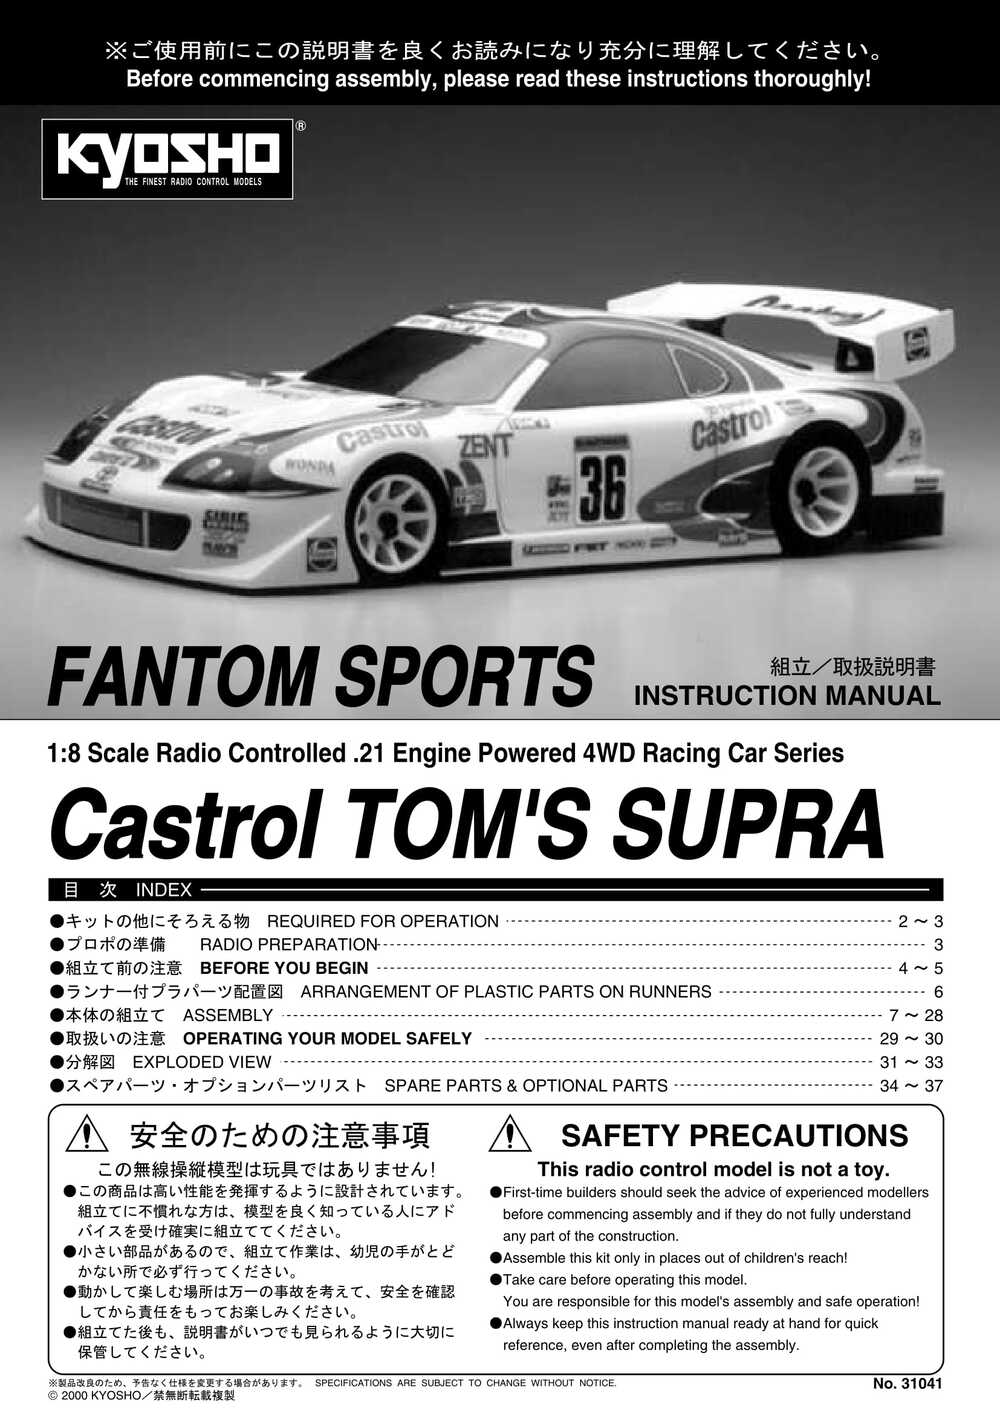 Kyosho - 31041 - Fantom Sports - Manual - Page 01